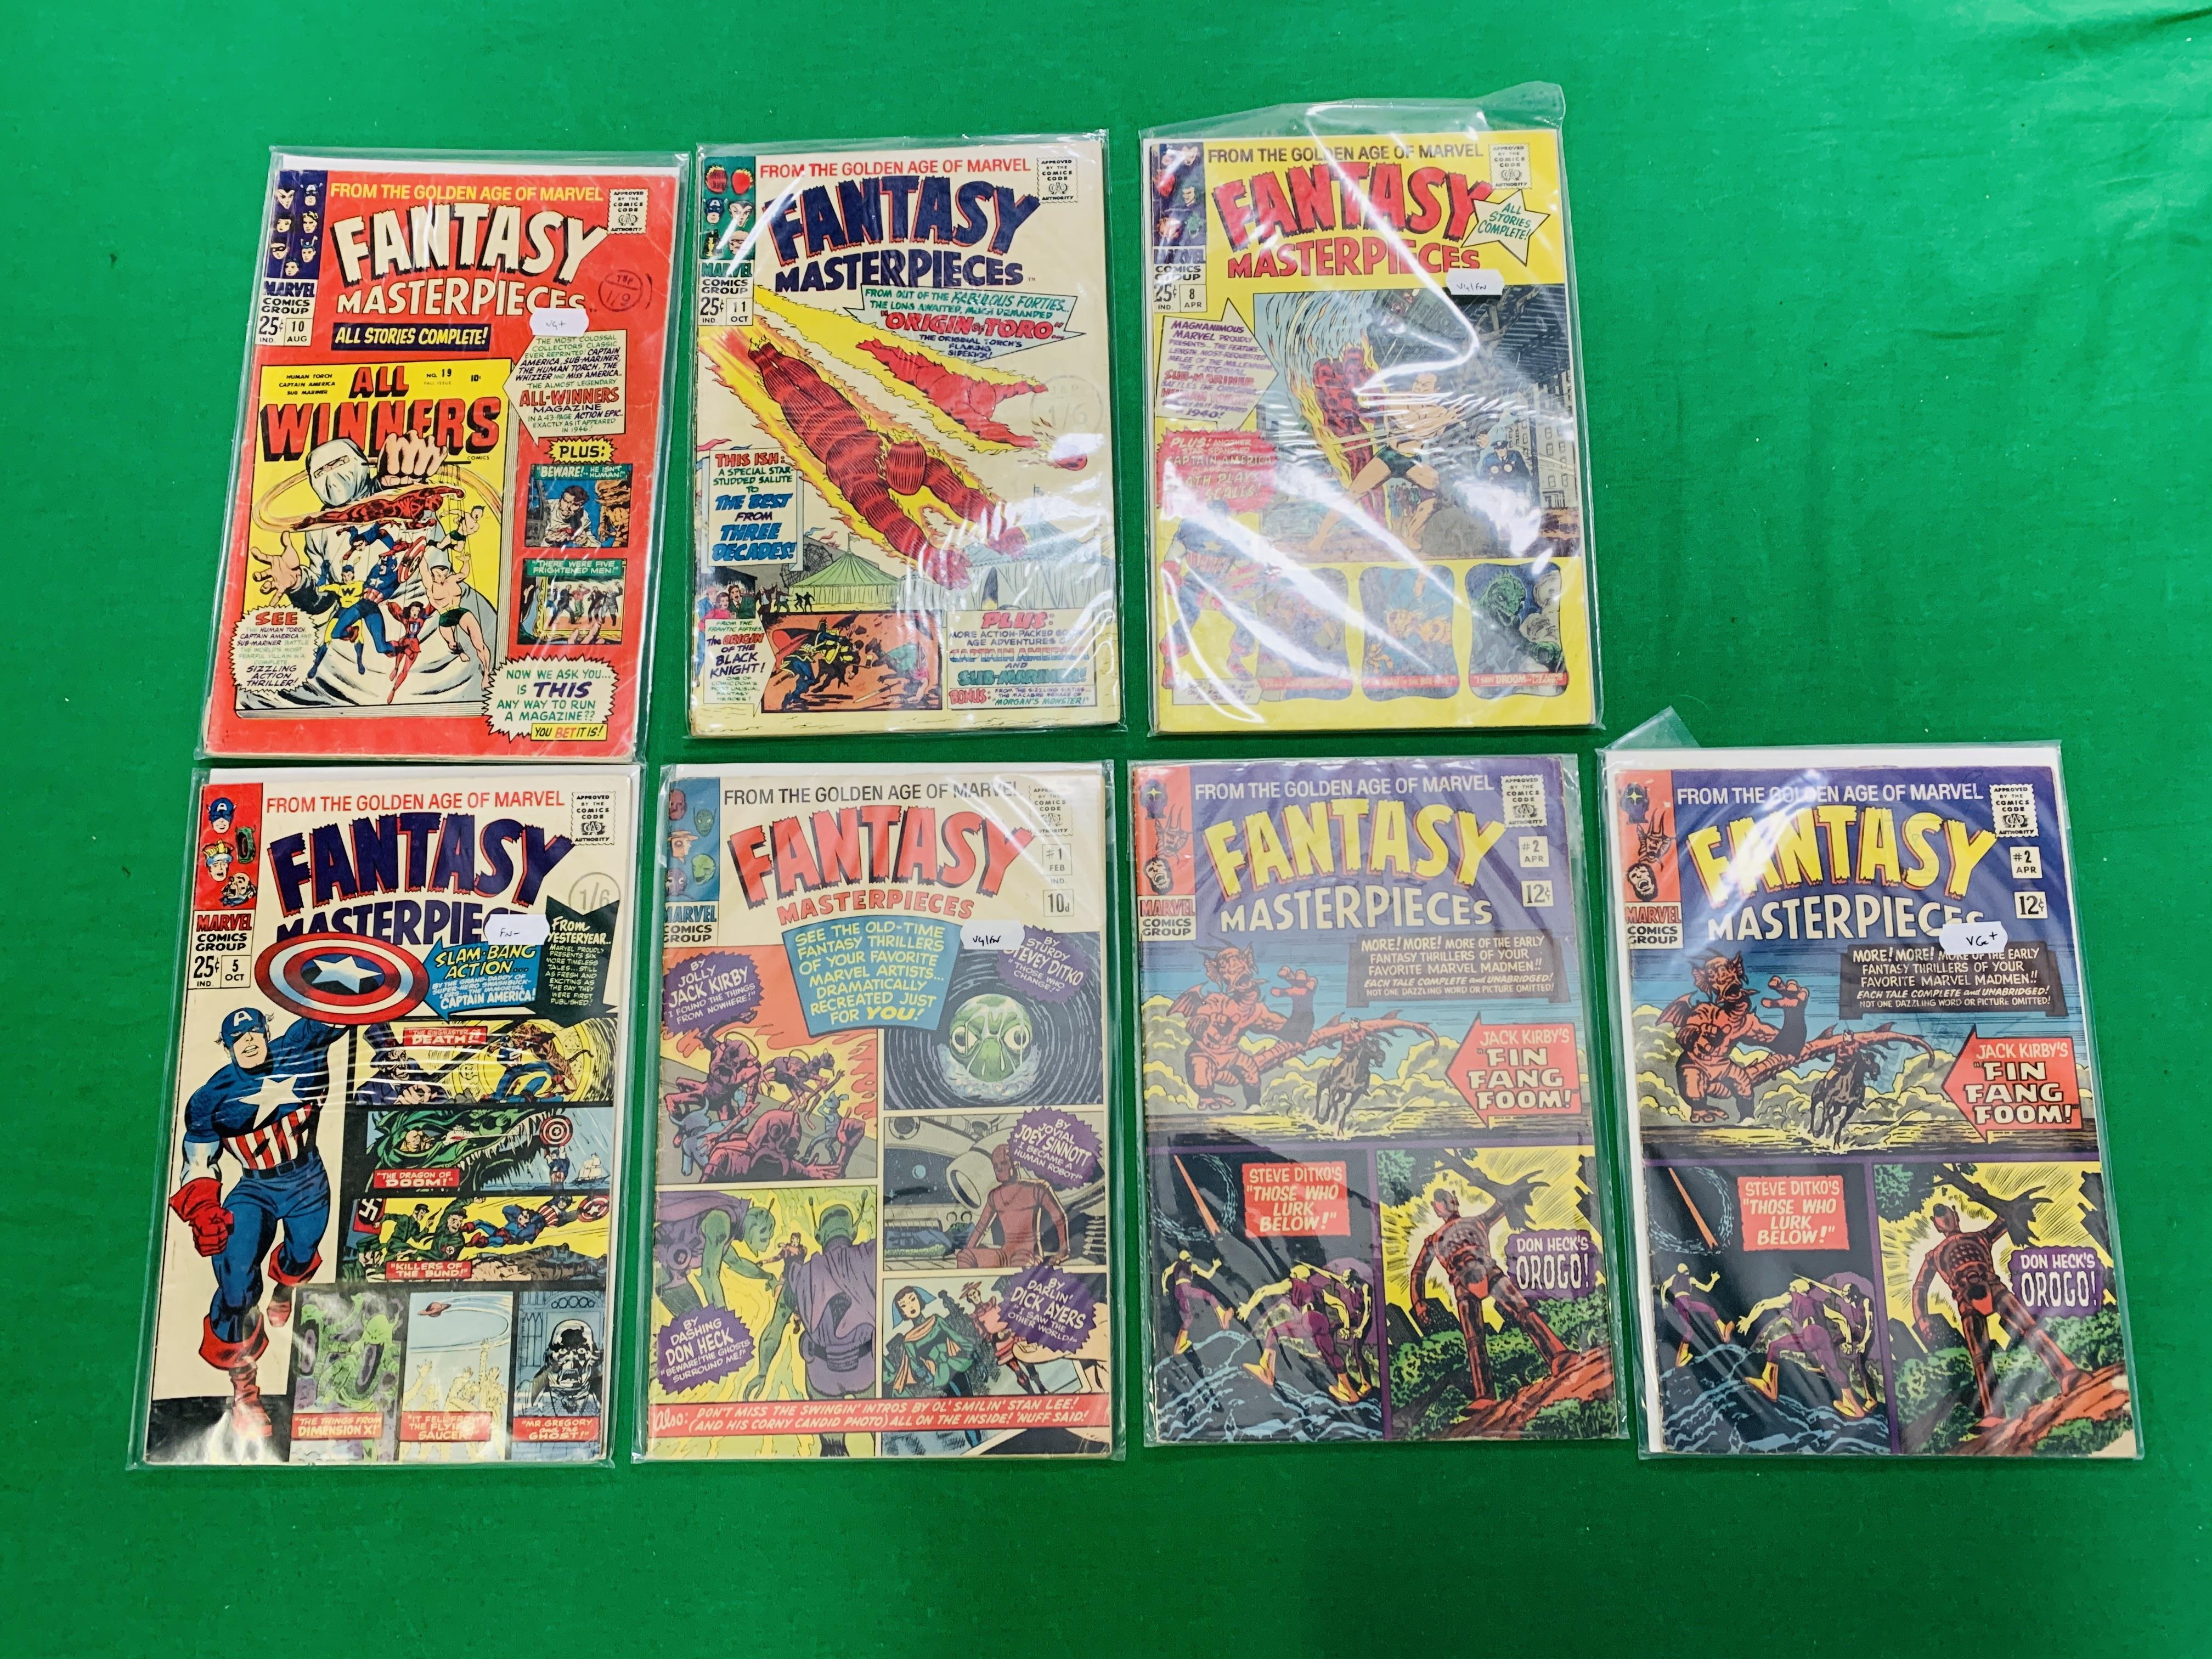 MARVEL COMICS FANTASY MASTERPIECES NO. 1, 2, 2, 5, 8, 10, 11, FROM 1966.